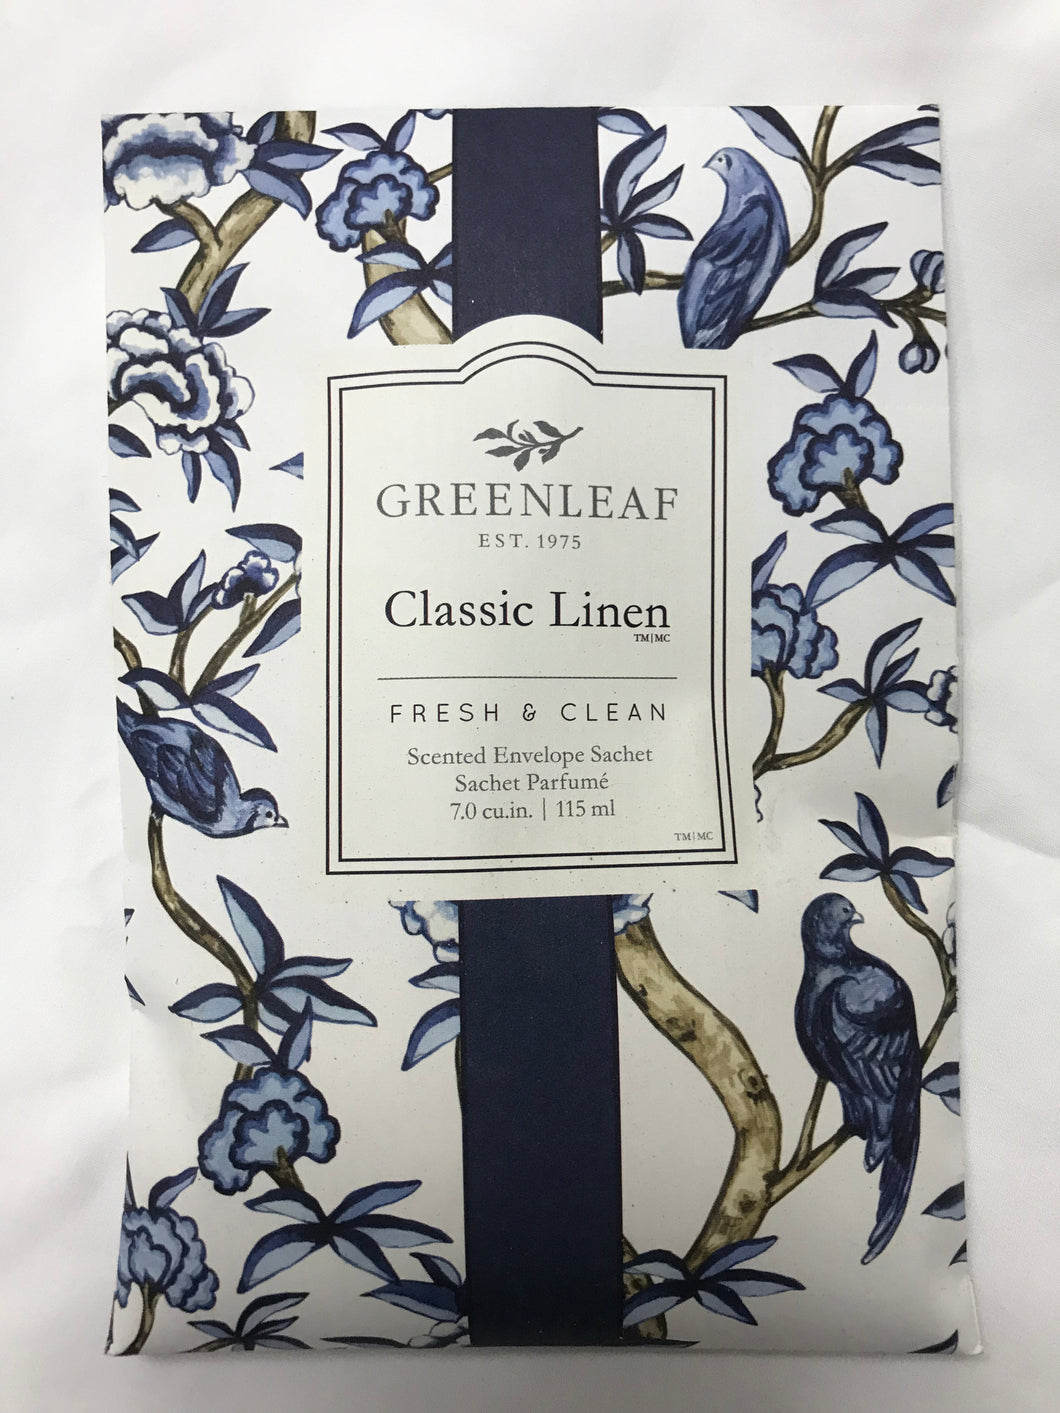 Greenleaf Scented Envelope Sachet - Classic Linen